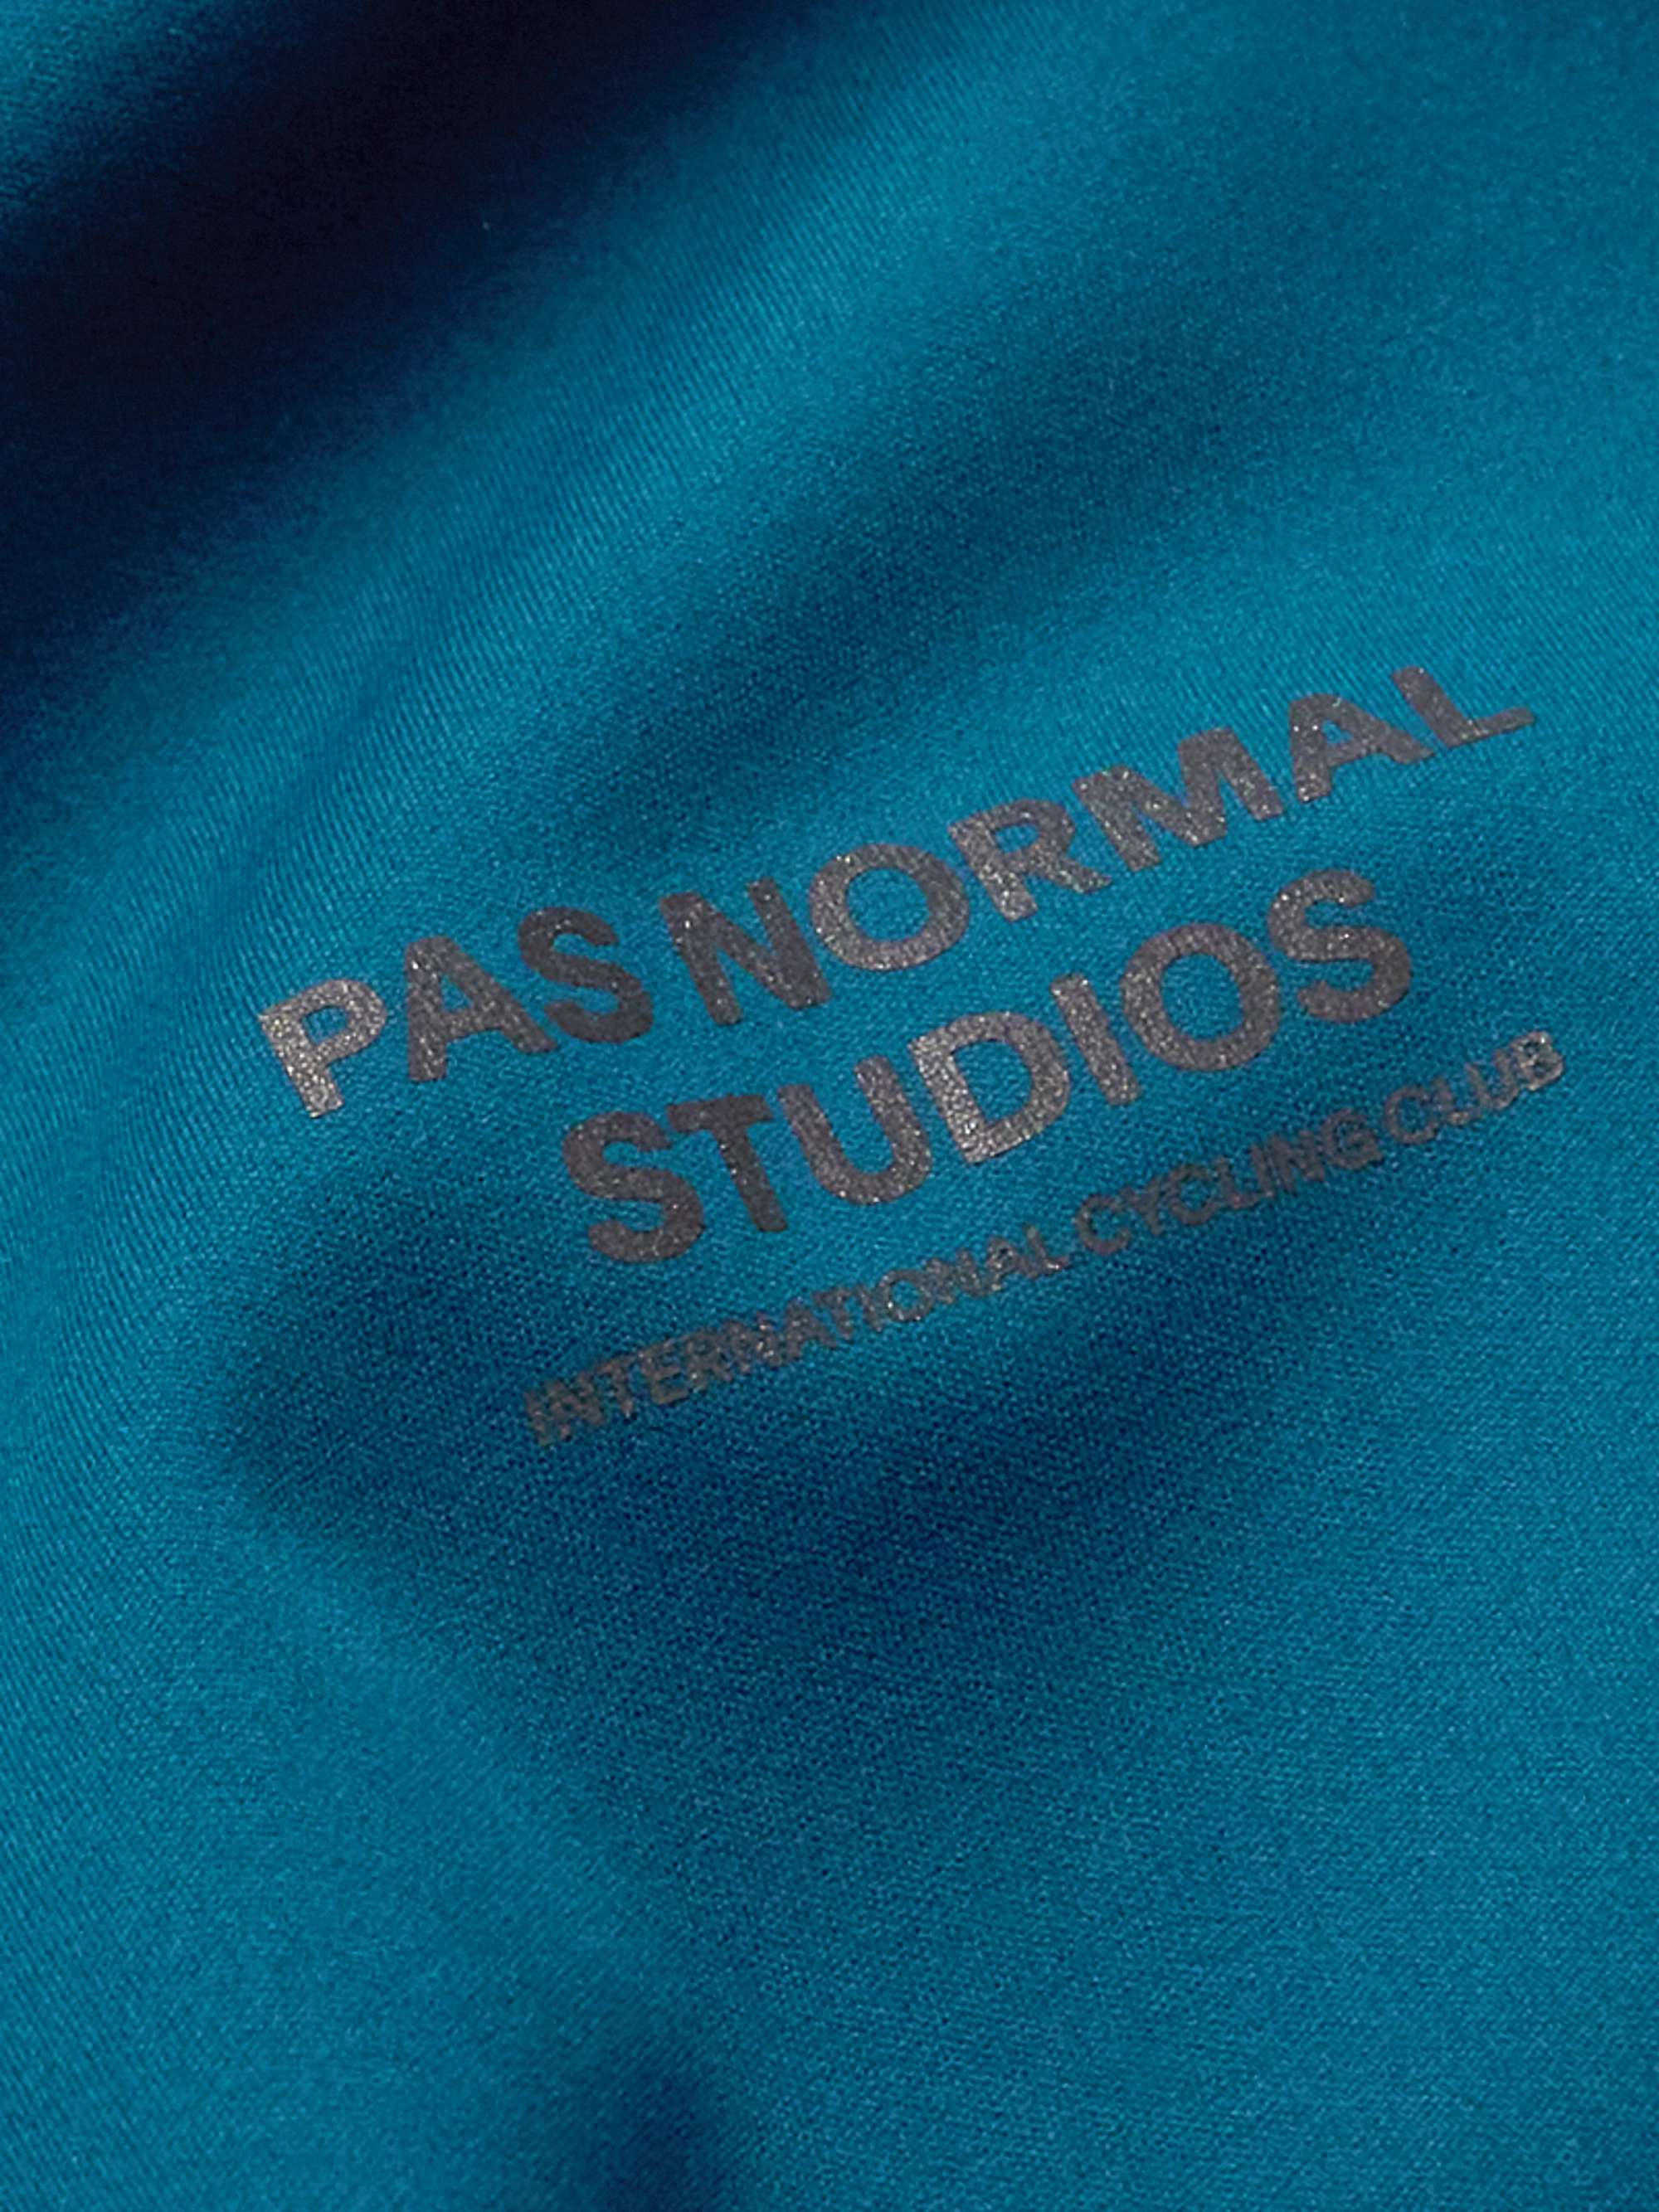 PAS NORMAL STUDIOS Colour-Block Polartec Power Shield Pro Cycling Jacket